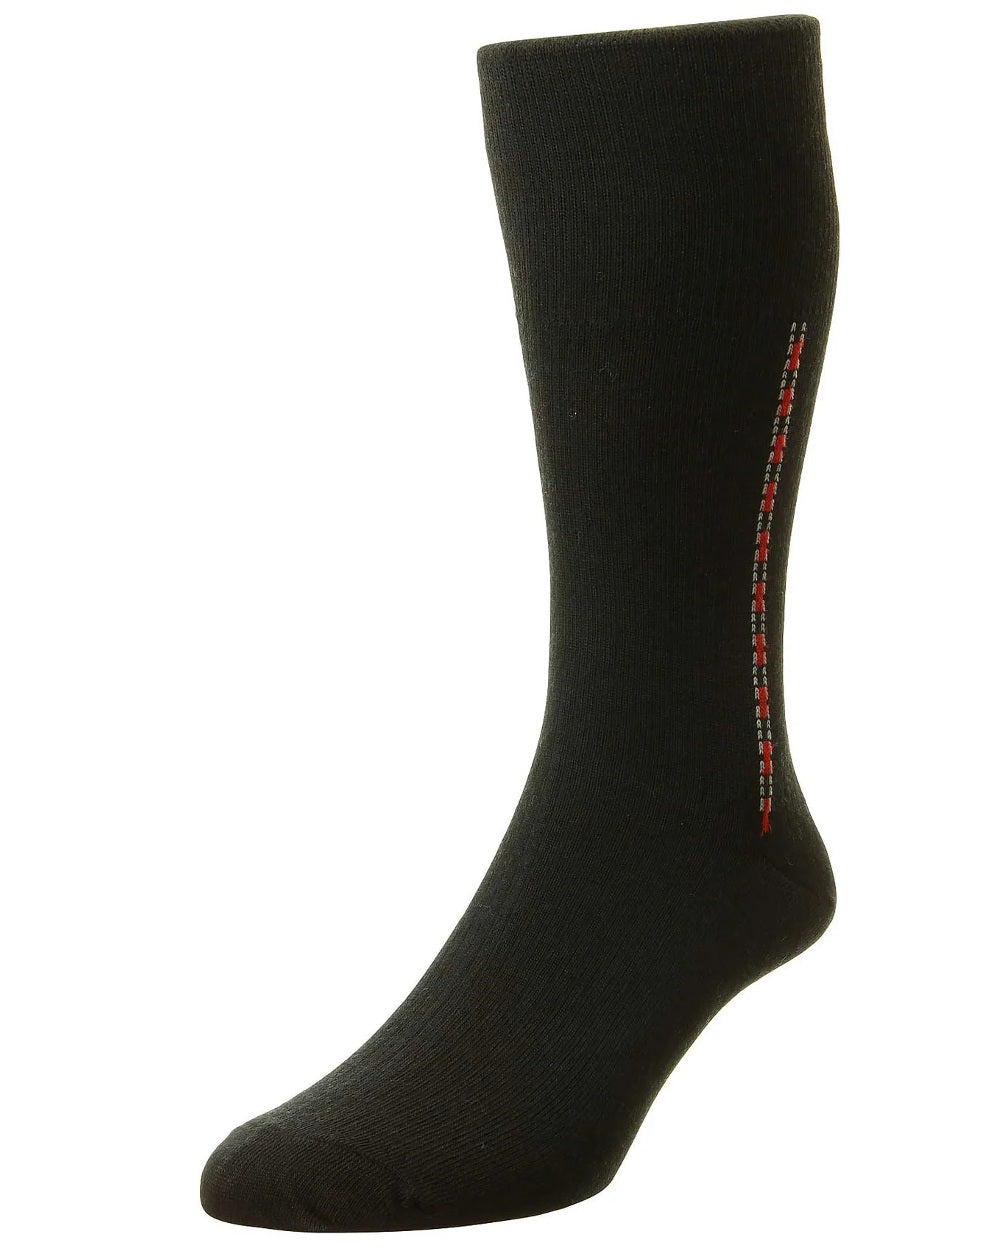 HJ Hall Fancy Panel Half Hose Socks in Black 